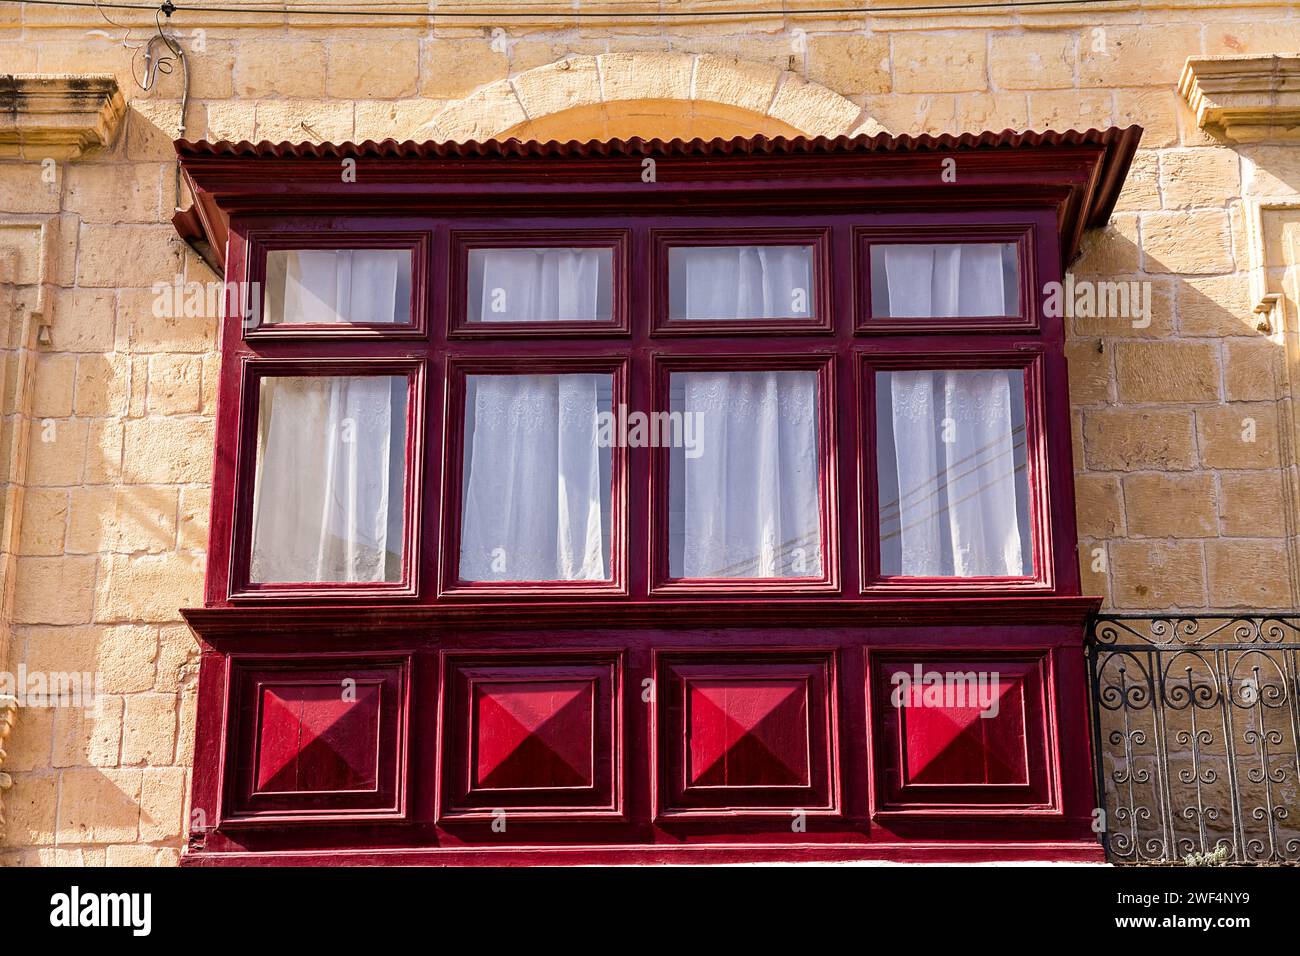 Gallarija, closed balconies, typical of Malta, red in colour Stock Photo